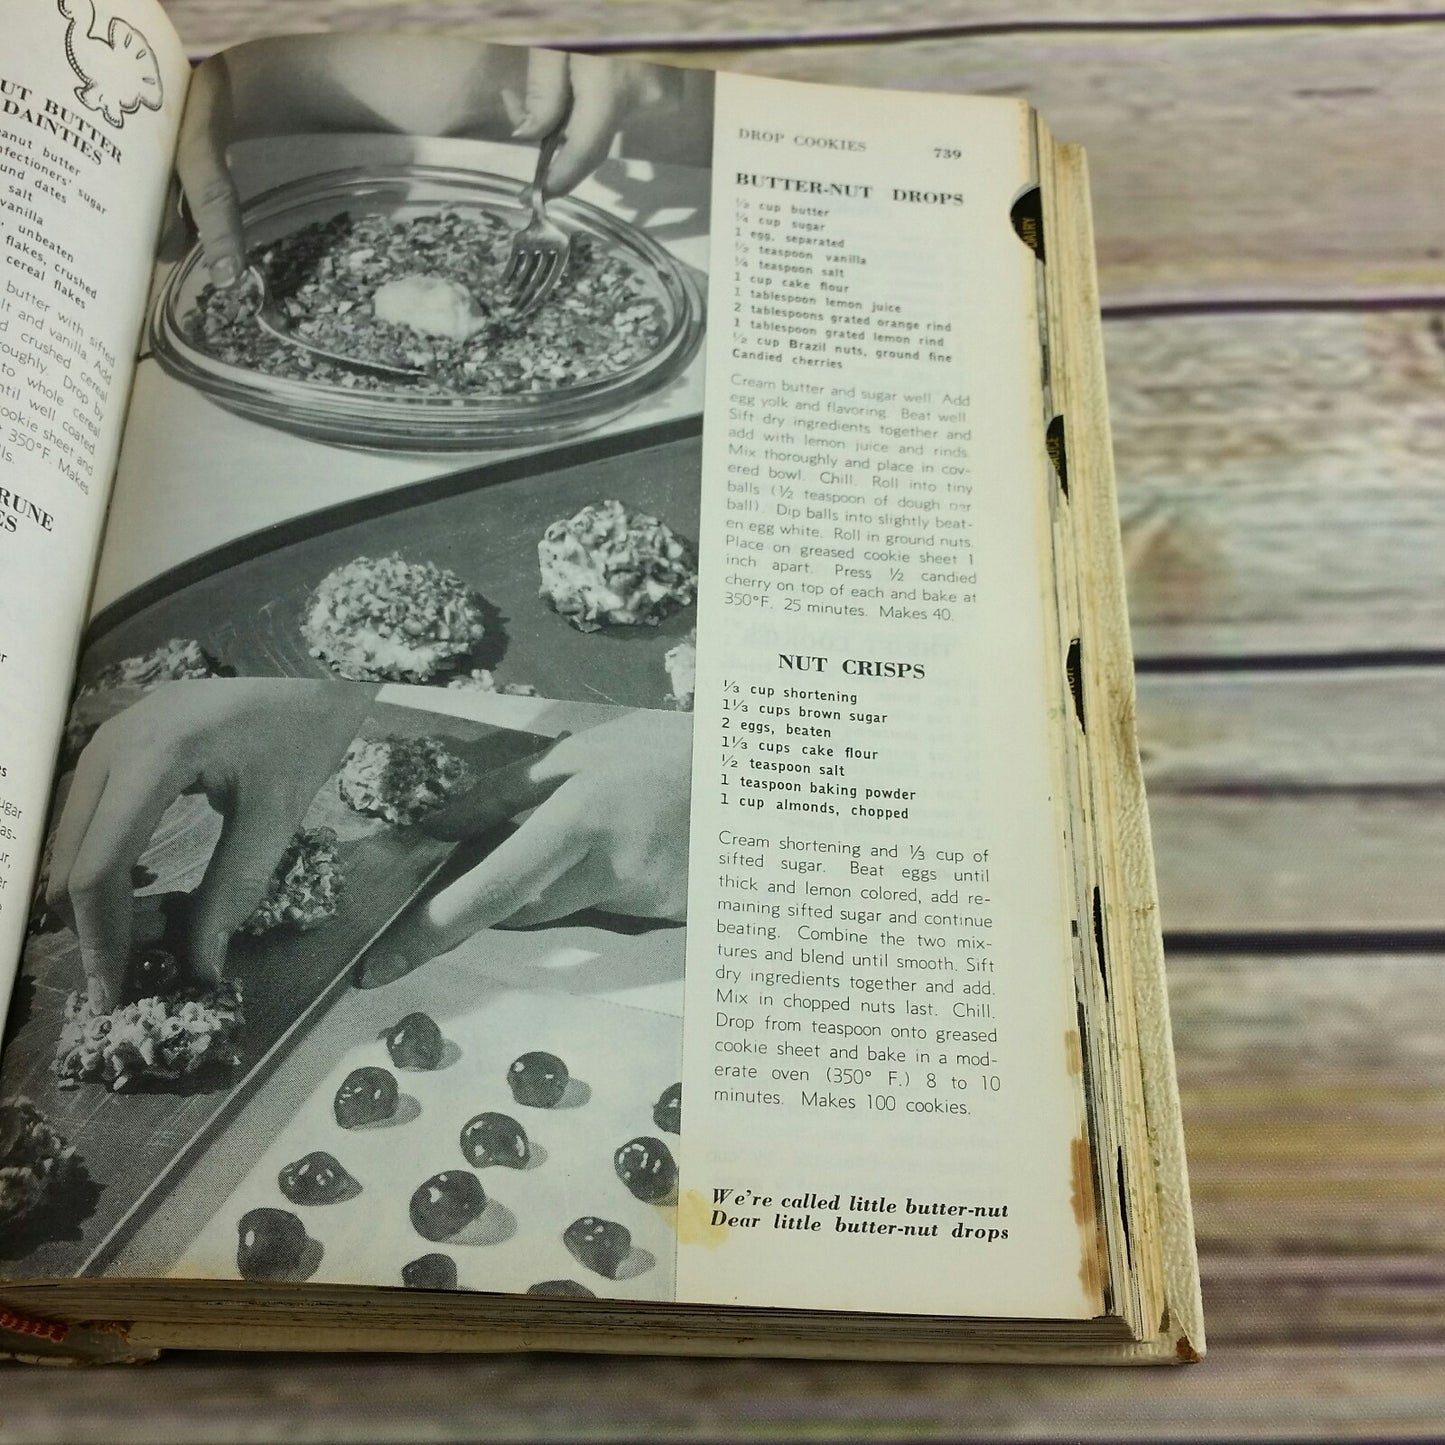 Vtg Cookbook Culinary Arts Institute Encyclopedic Recipes 1970 Ruth Berolzheimer - At Grandma's Table